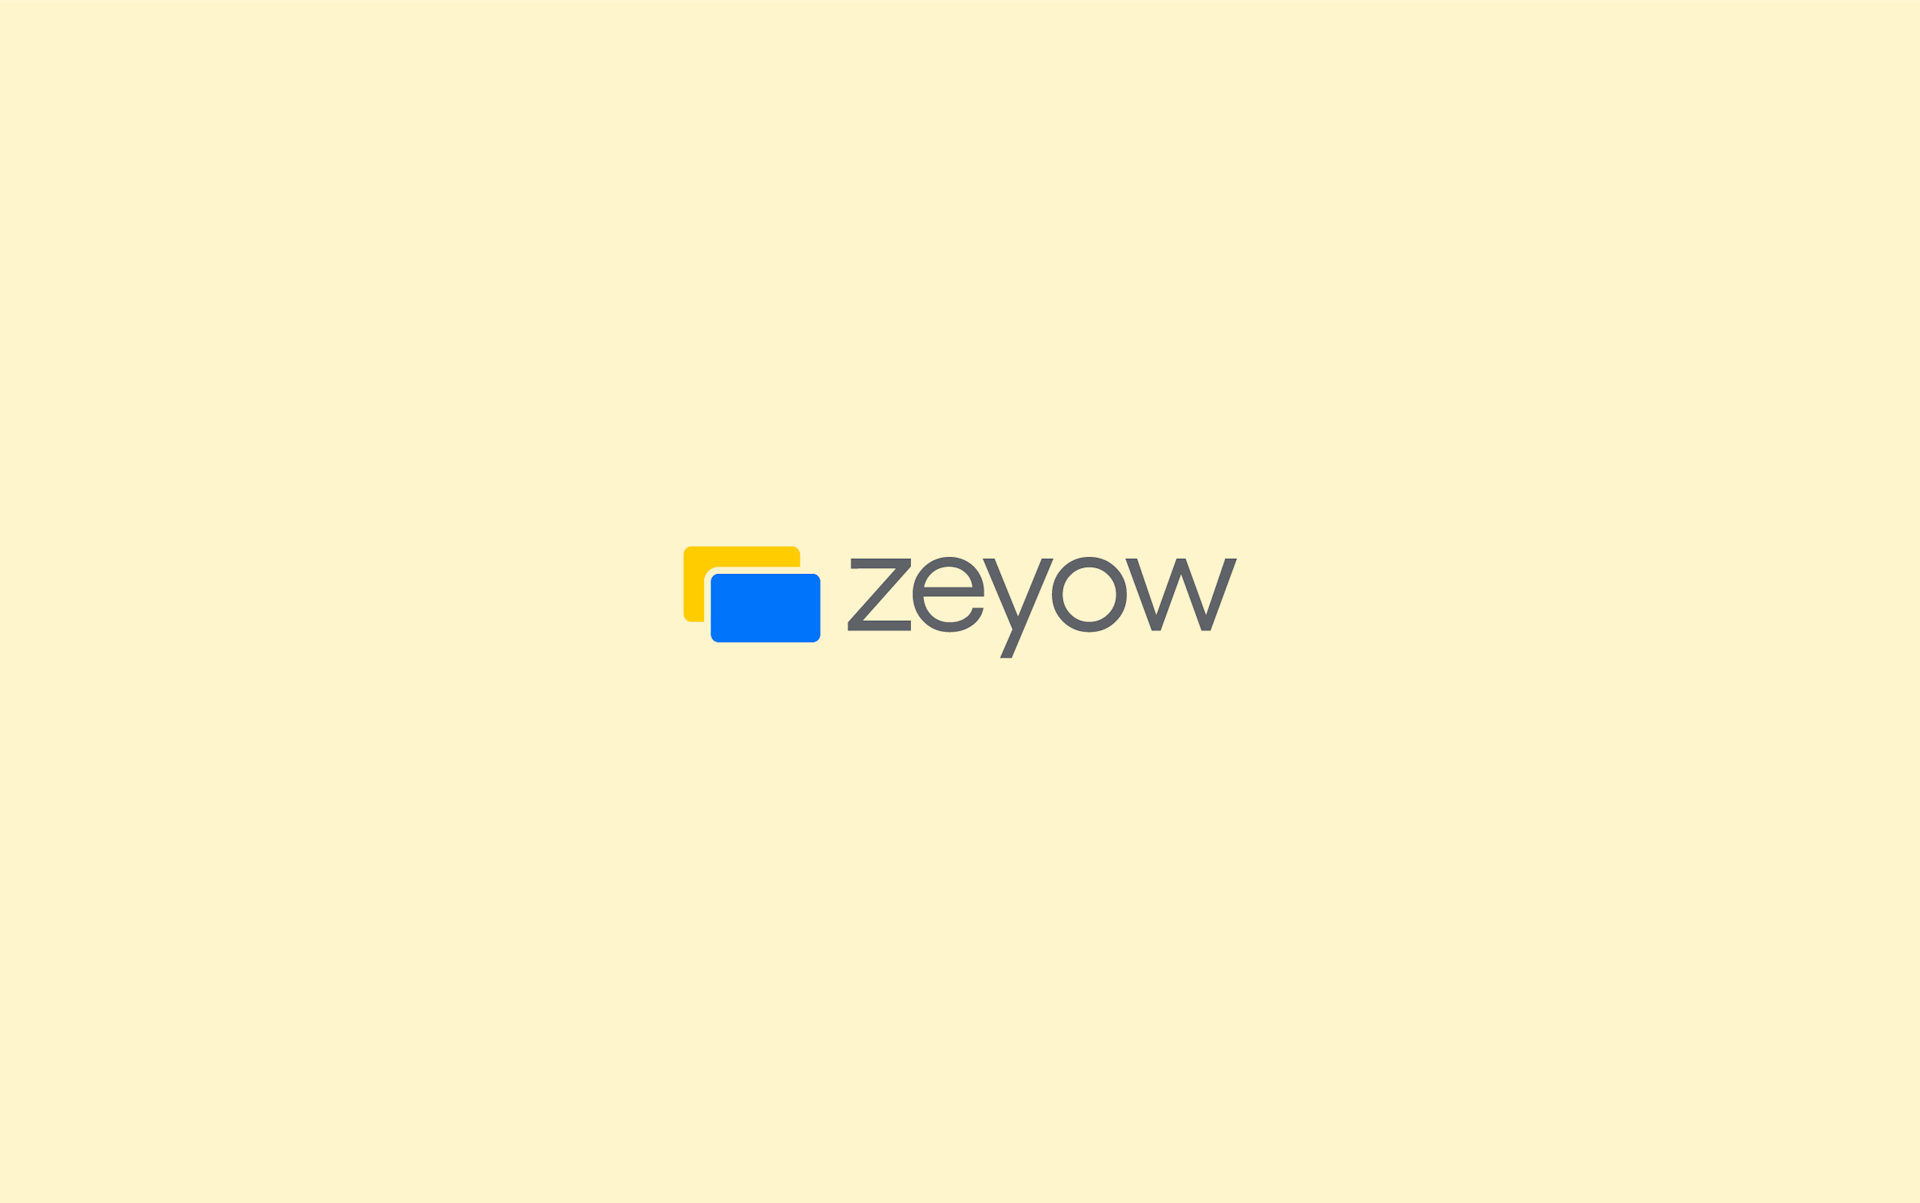 Zeyow revolutionizes your online shopping!